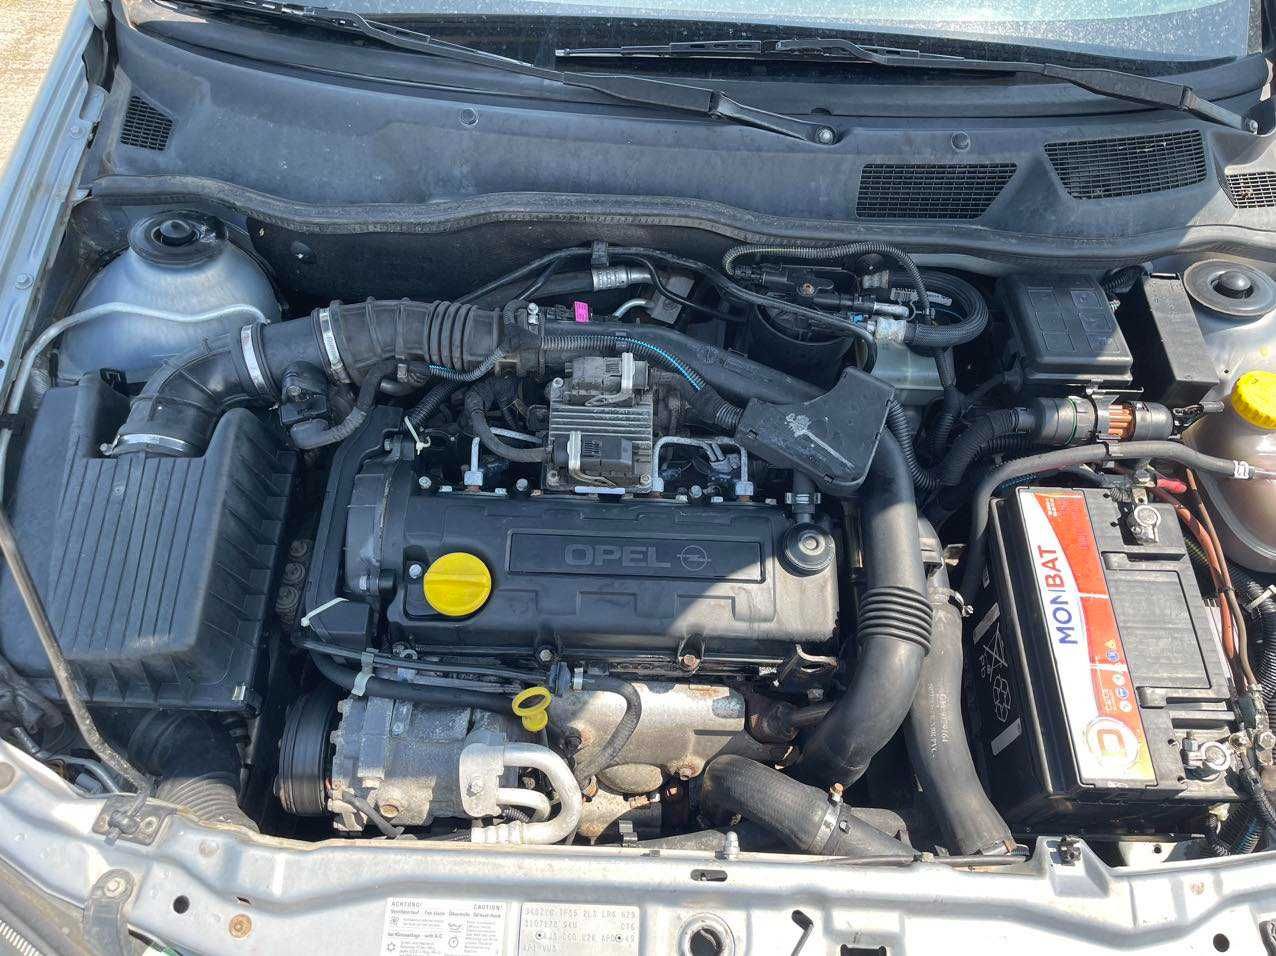 Vand Opel Astra G 1.7 CDTI motor isuzu